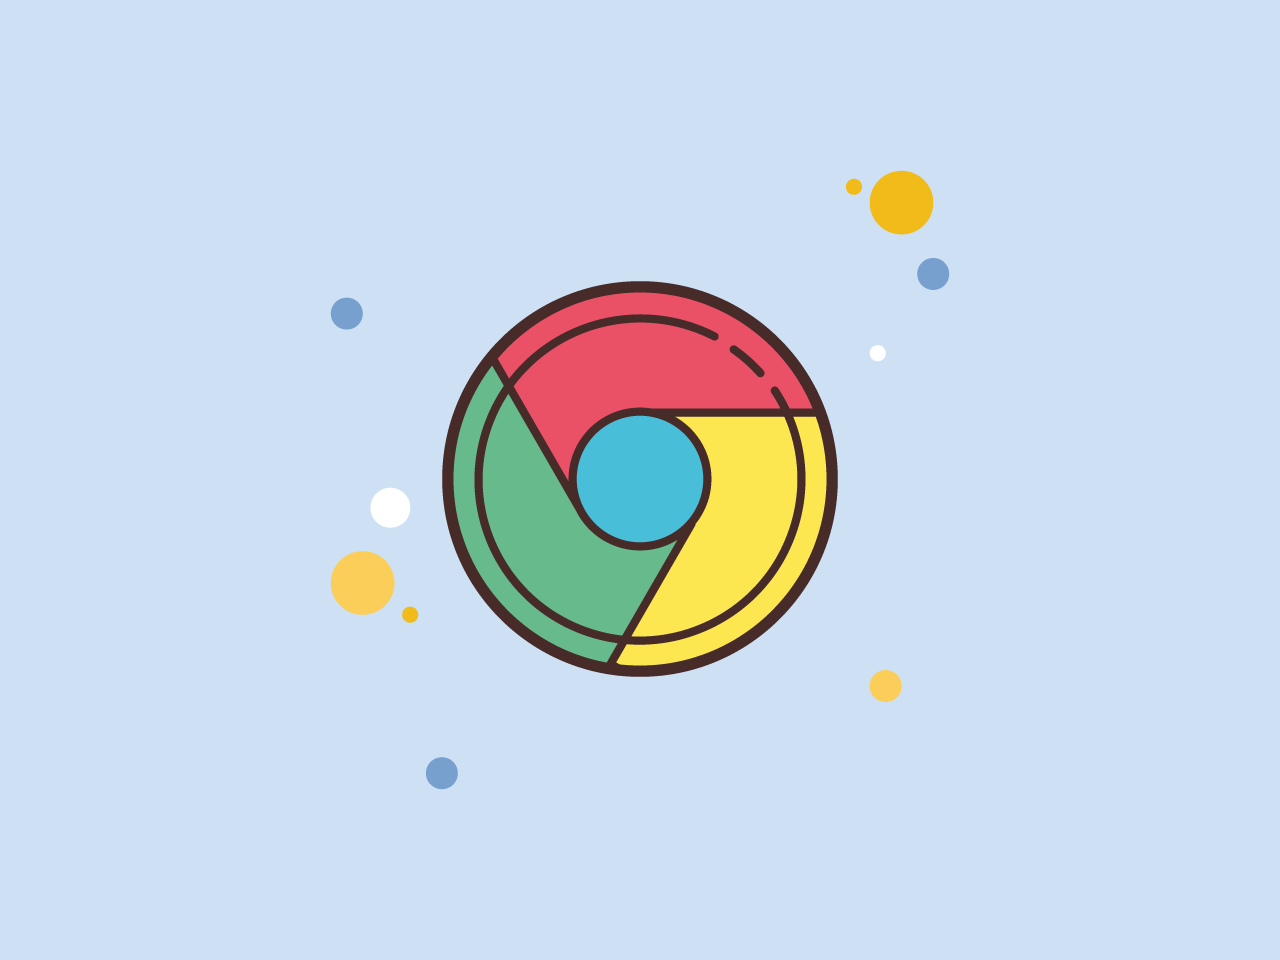 Google Chrome 90 HTTPS at first